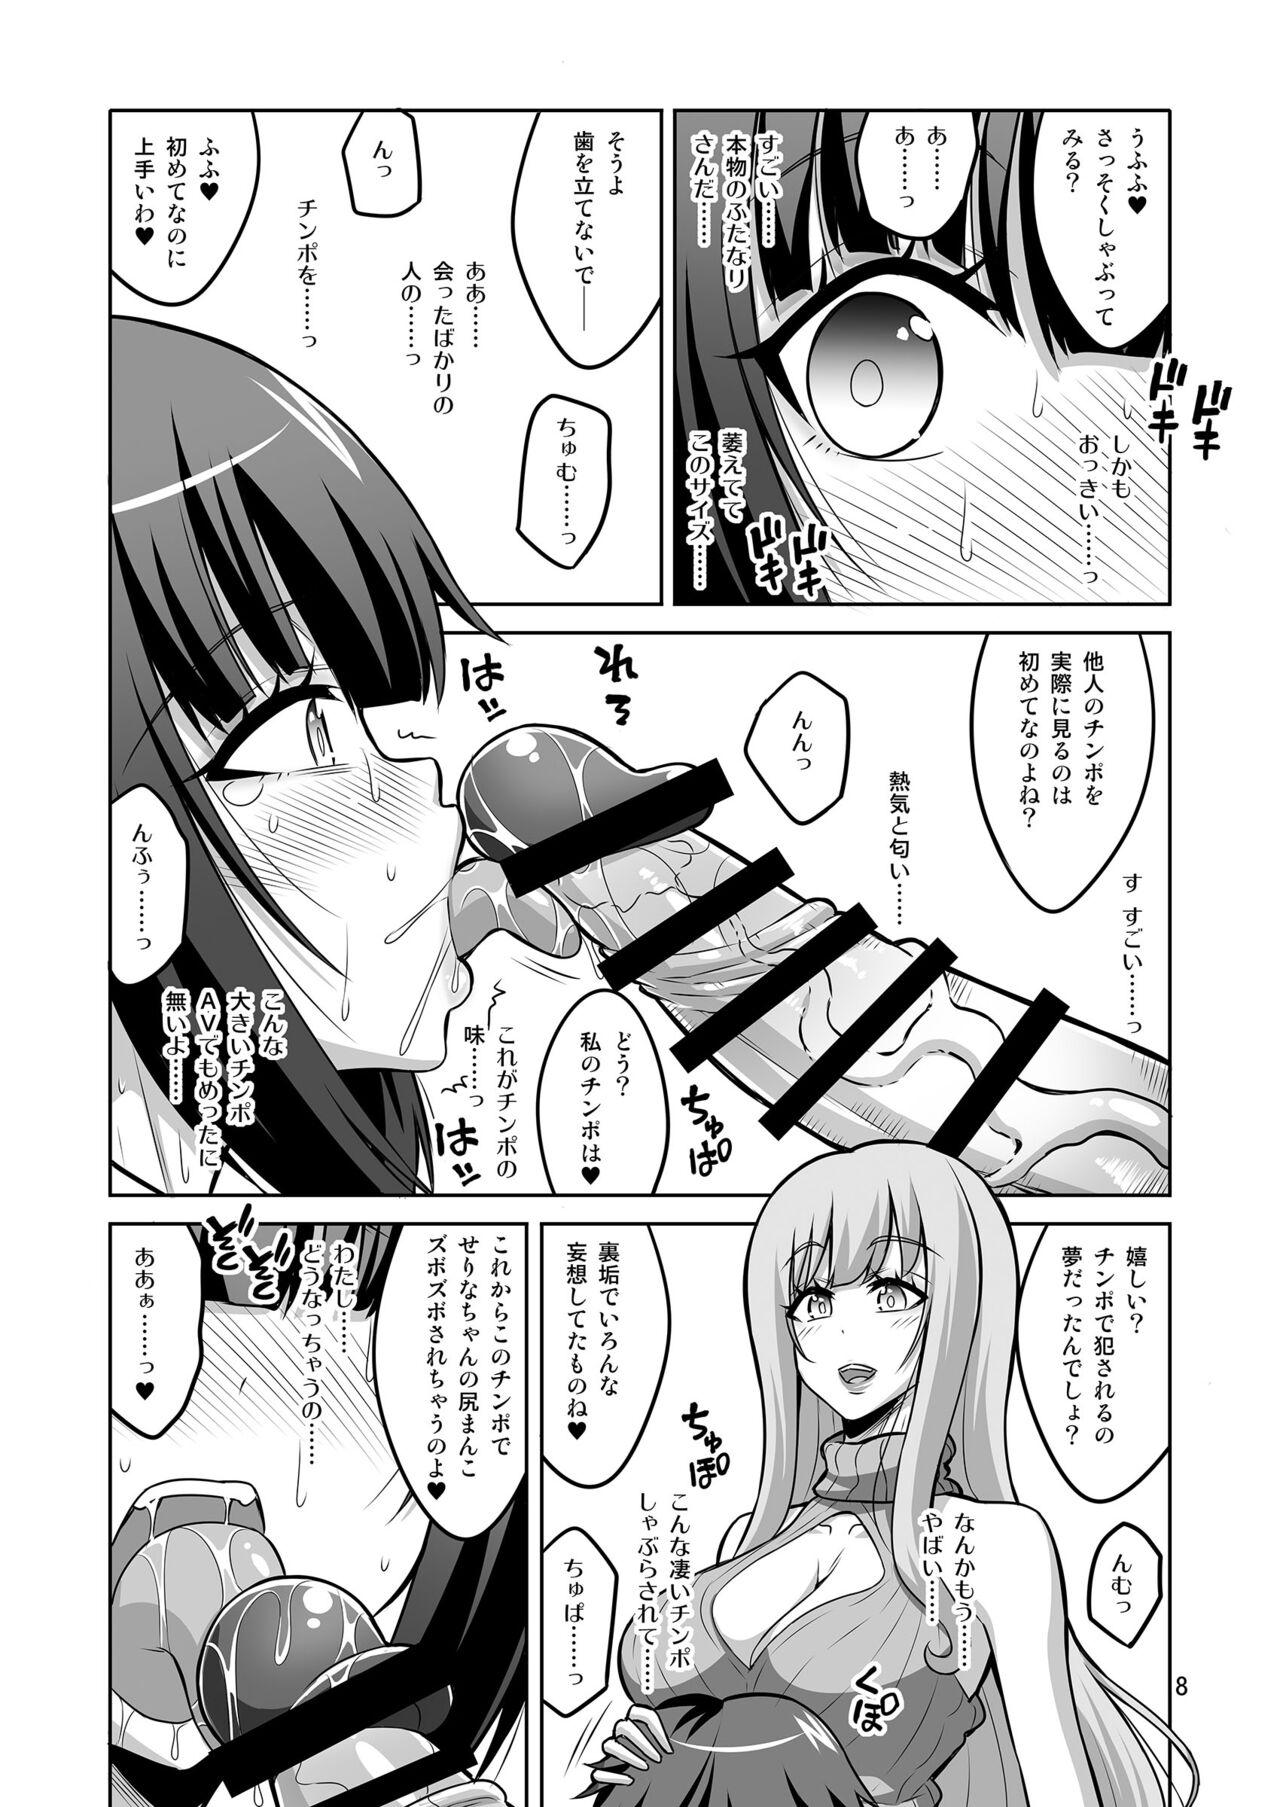 Chaturbate A Futanari Older Sister Turns An Underground Crossdresser Into A Perverted Masochist - Original Public - Page 7